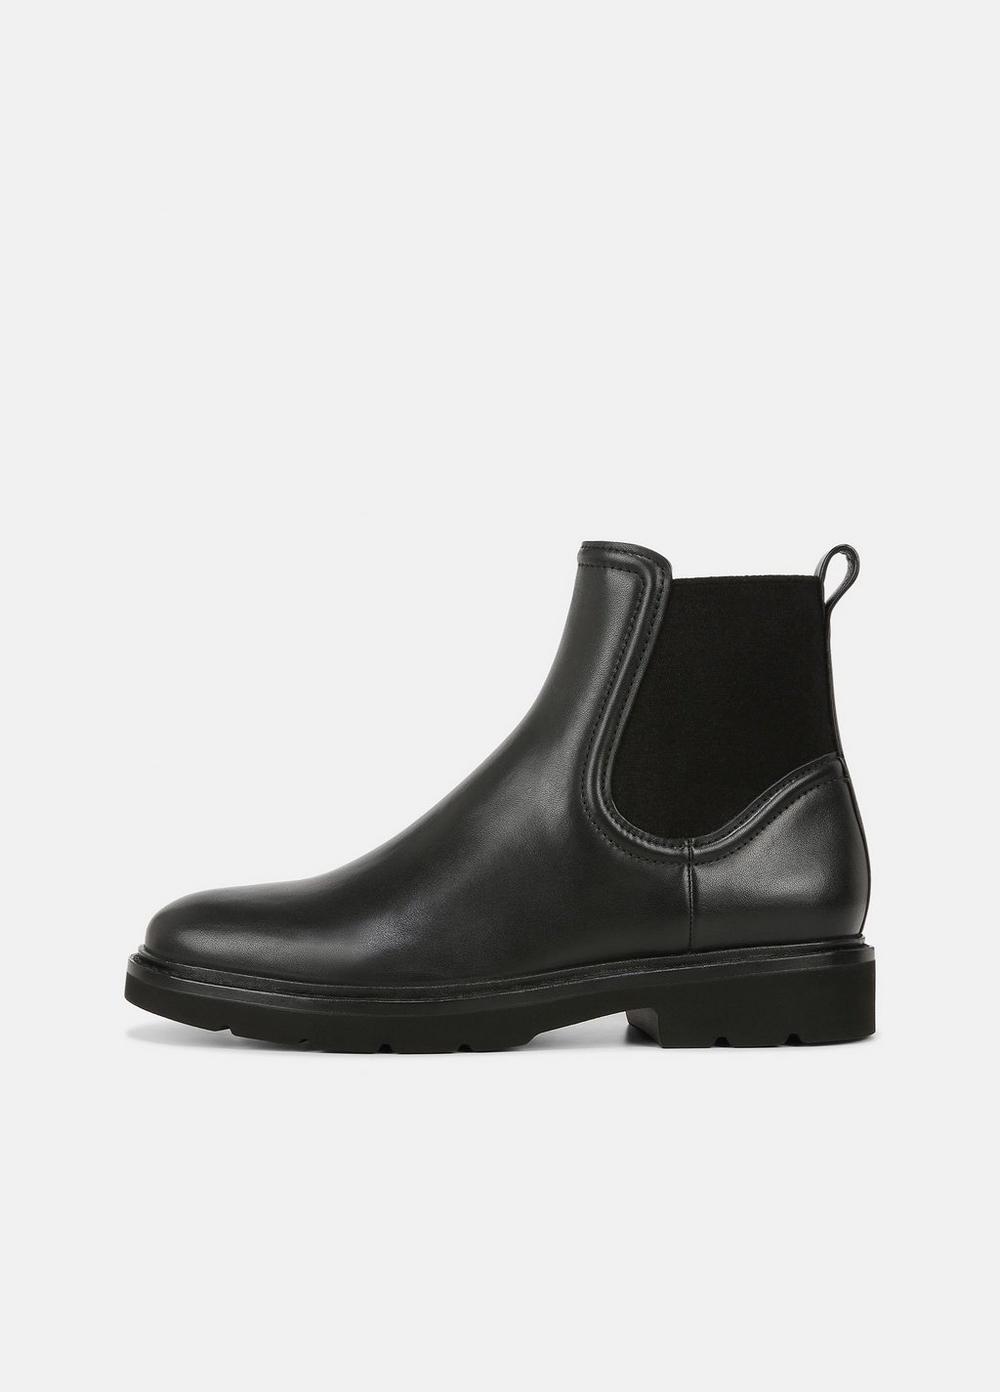 Rue Leather Lug Boot, Black, Size 5 Vince